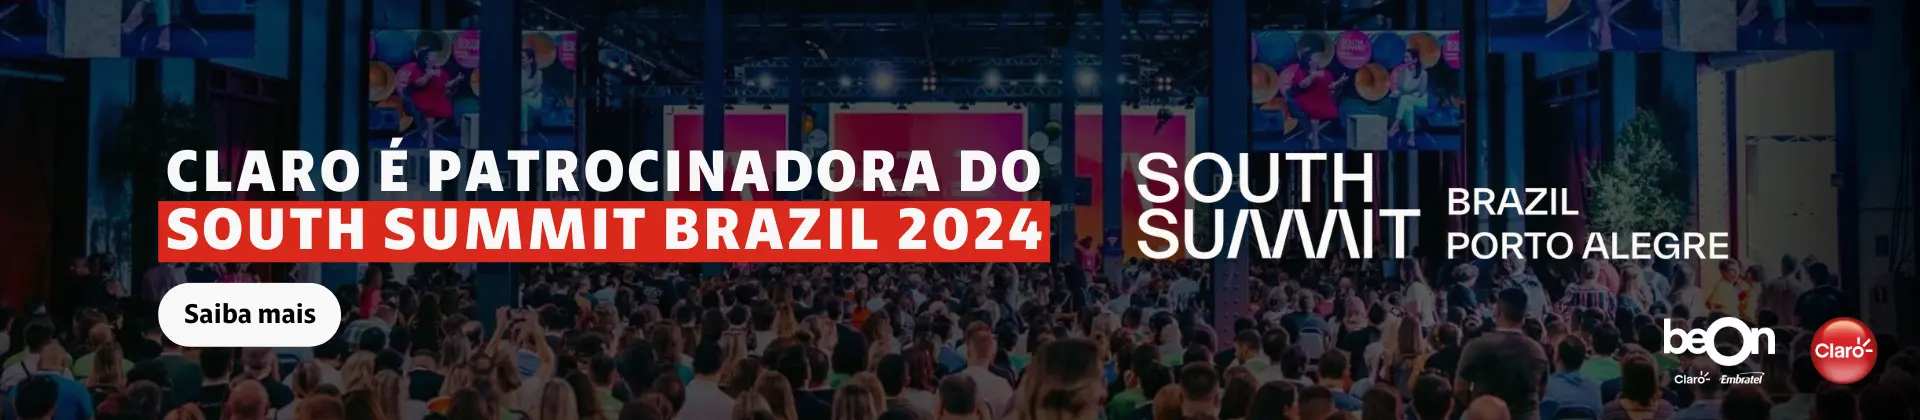 beOn Claro no South Summit Brazil 2024.